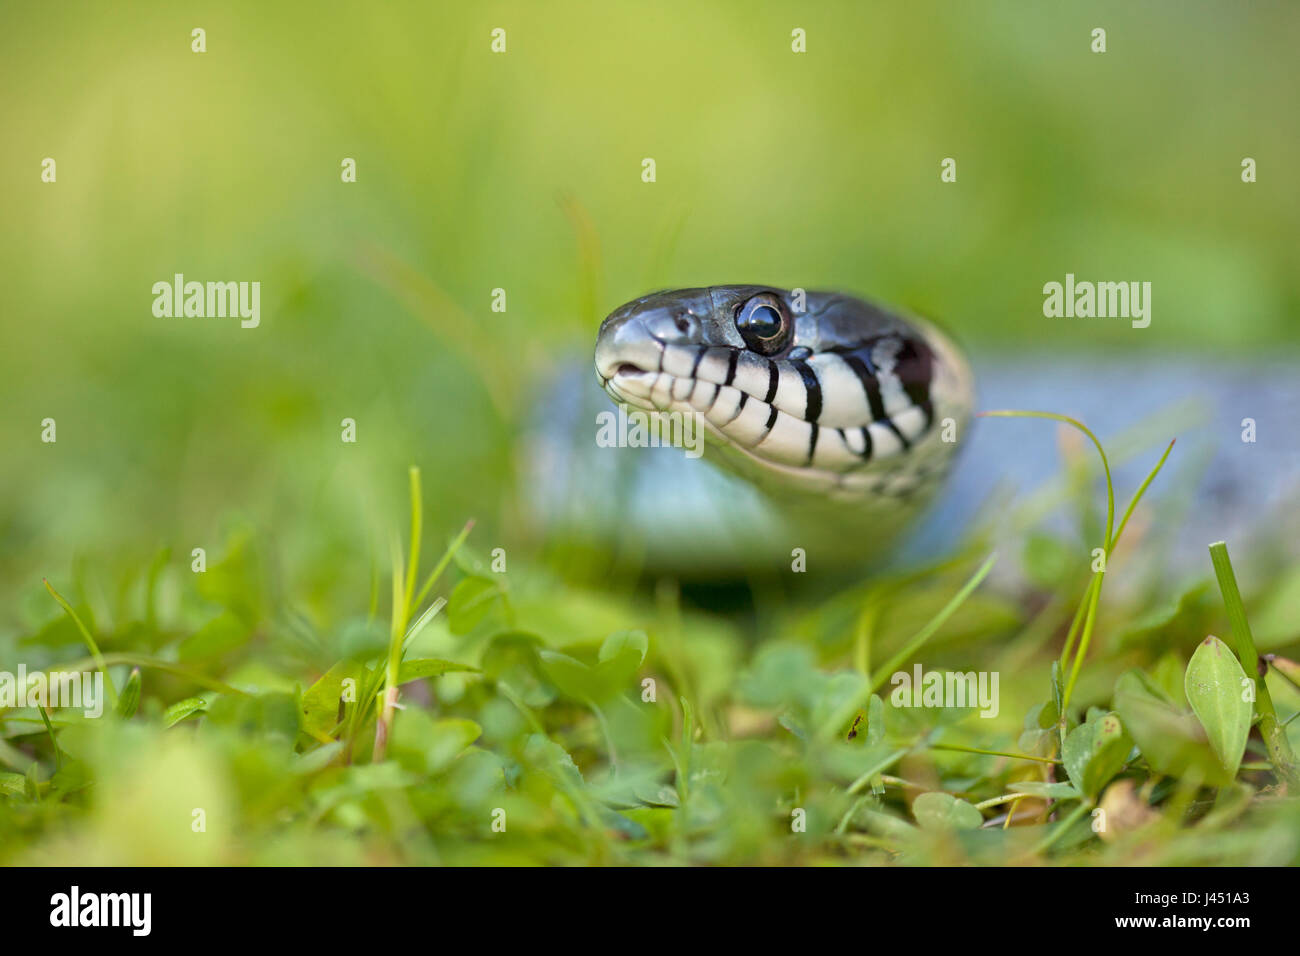 grass snake in grass Stock Photo